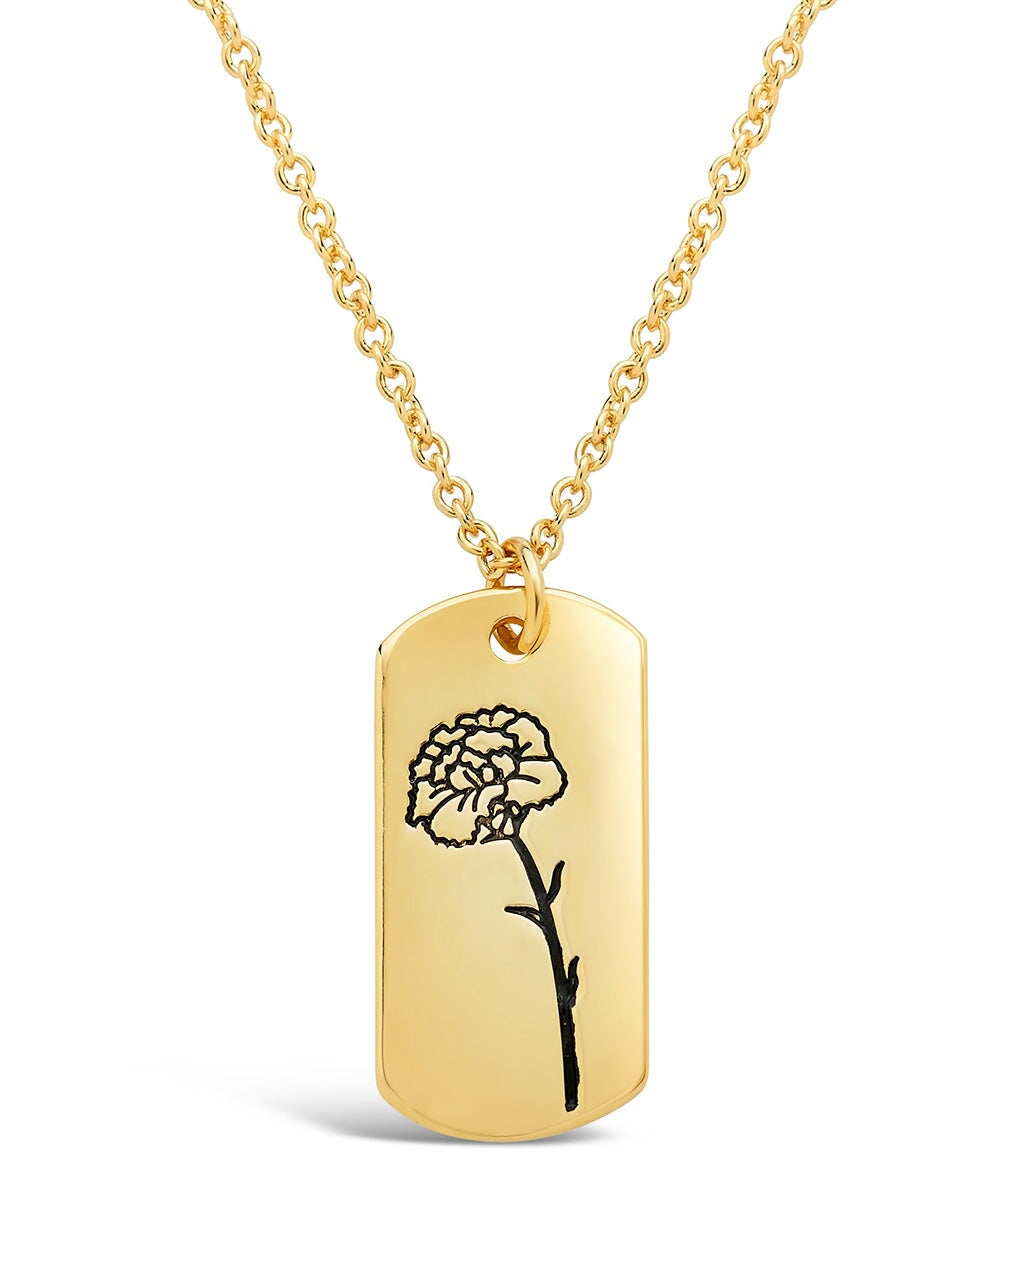 Birth Flower Pendant Necklace Sterling Forever Gold January / Carnation 